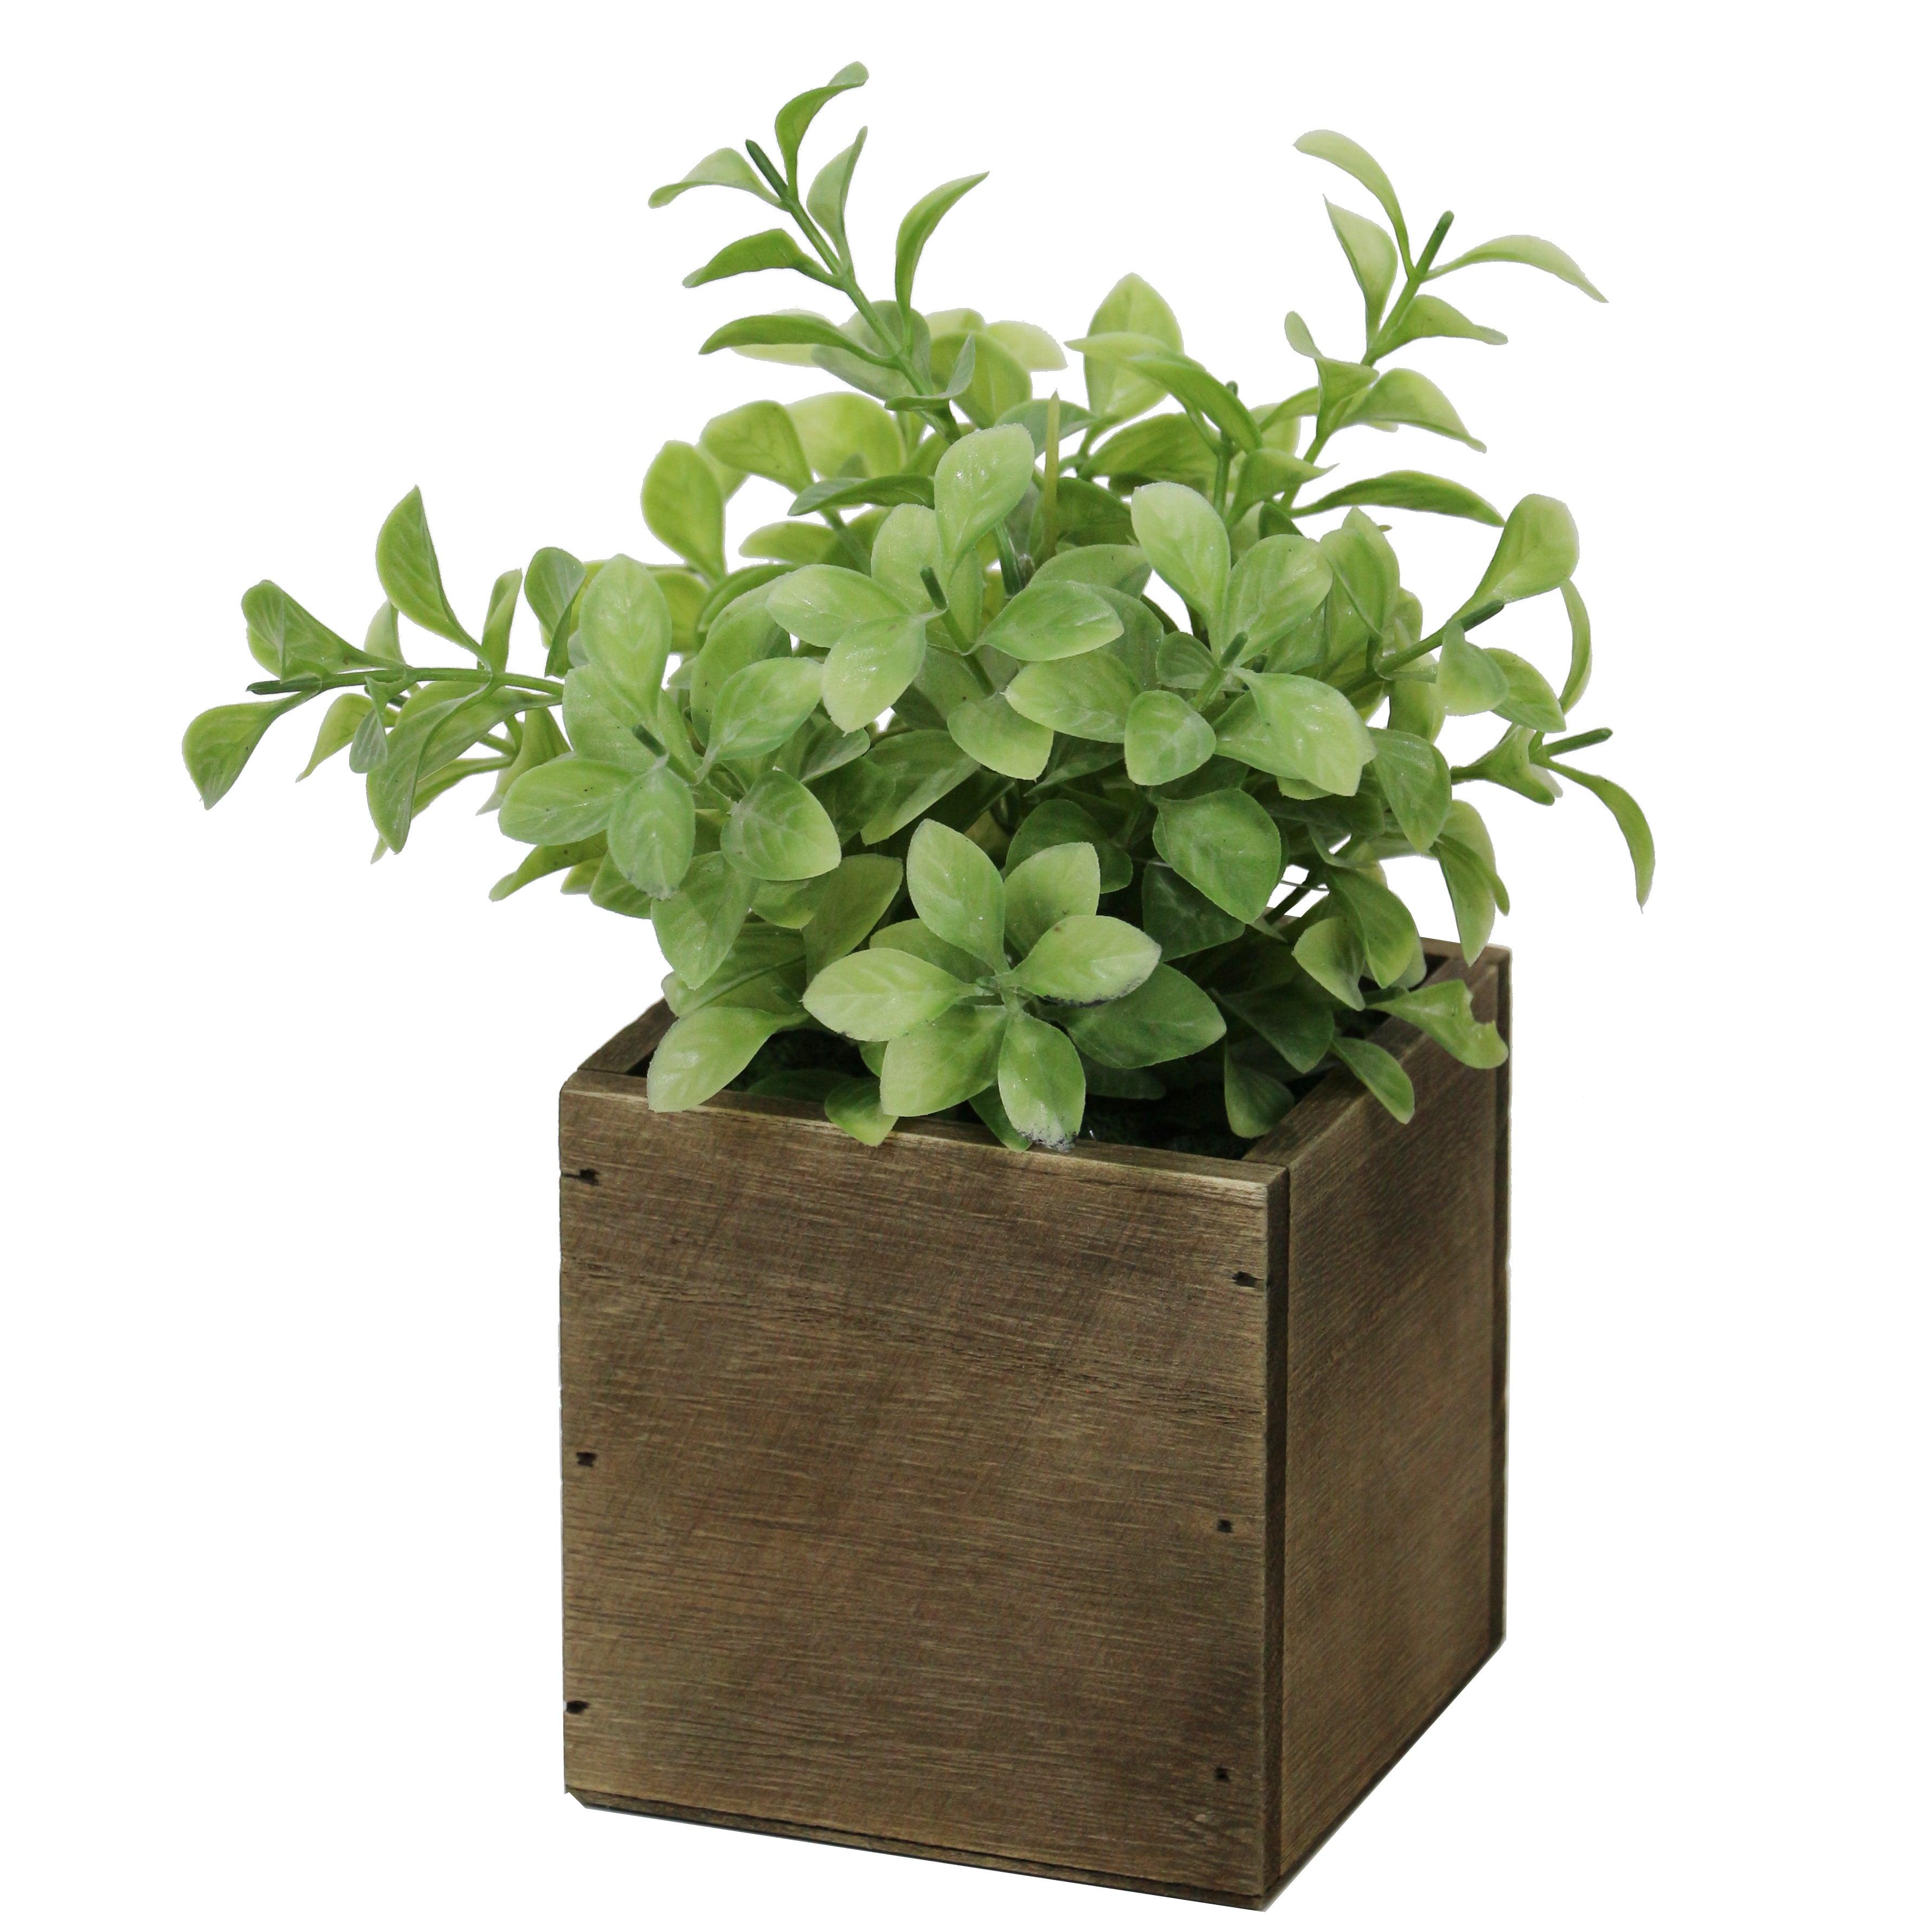 Floret Lifelike Plant in Rustic Wooden Pot